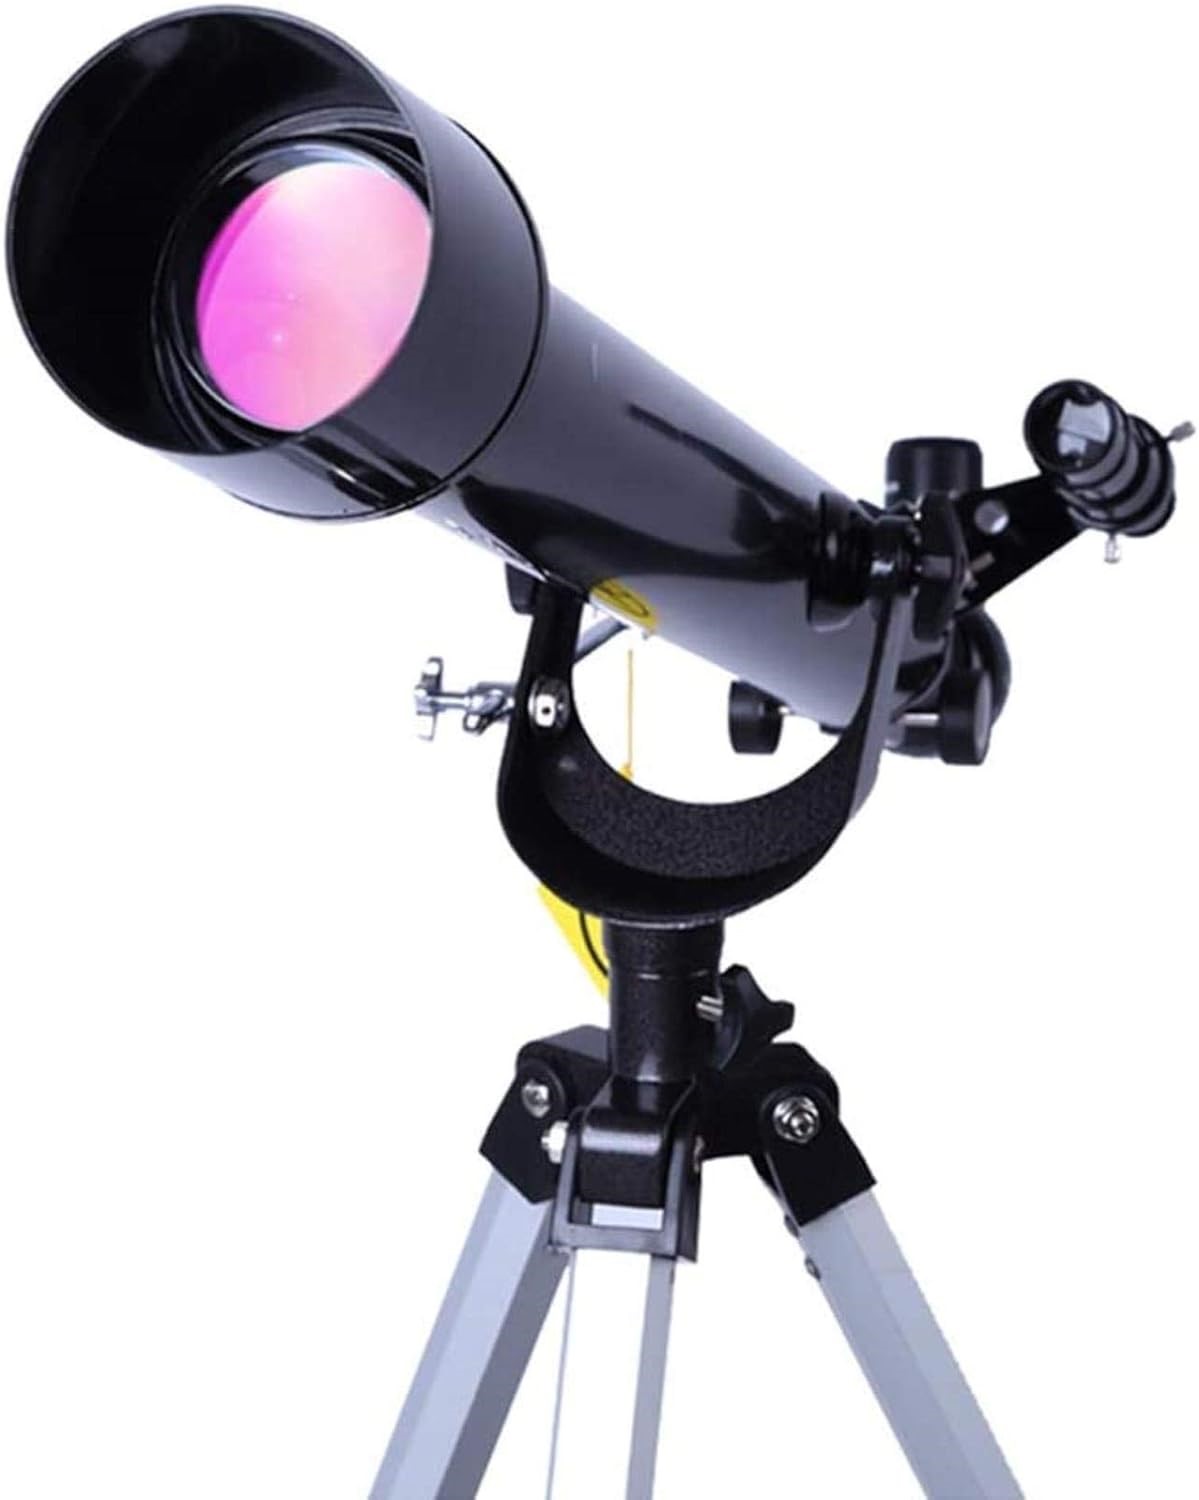 Spacmirrors Telescope for Astrophotography | DeviceDaily.com